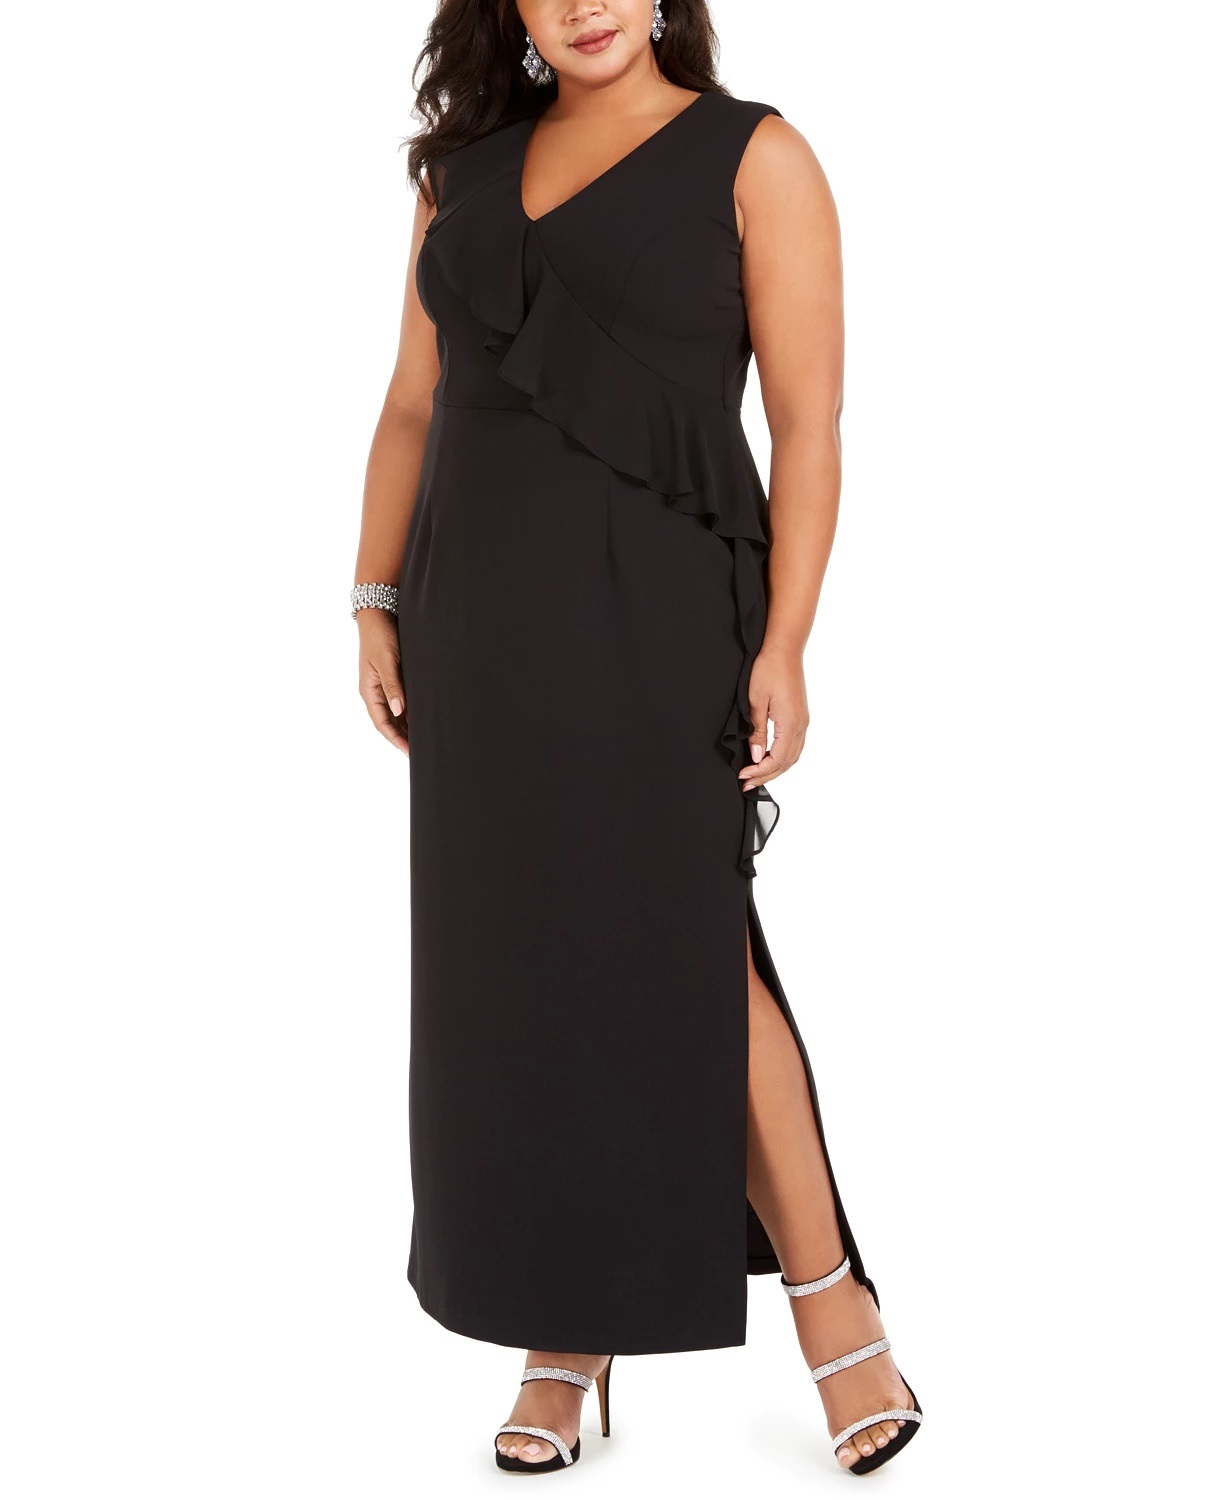 Connected Women's Plus Size V-Neck Ruffle Dress Black Size 20W